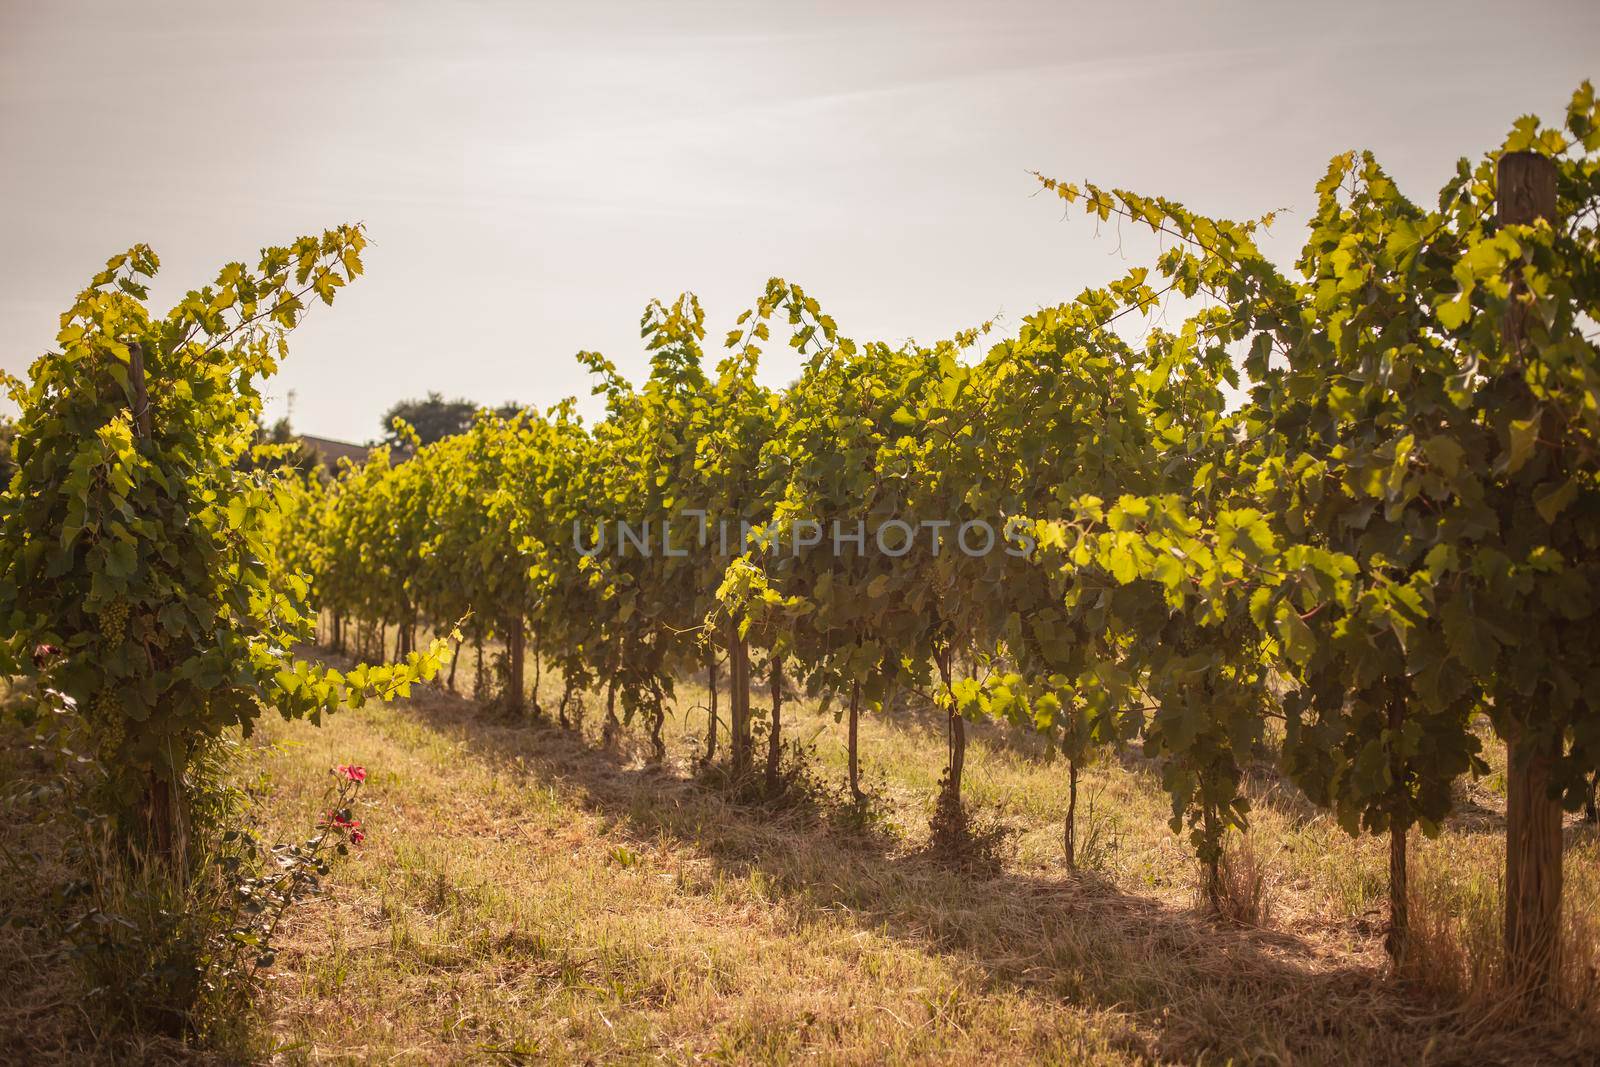 Italian vineyard detail in summer in a sunny day